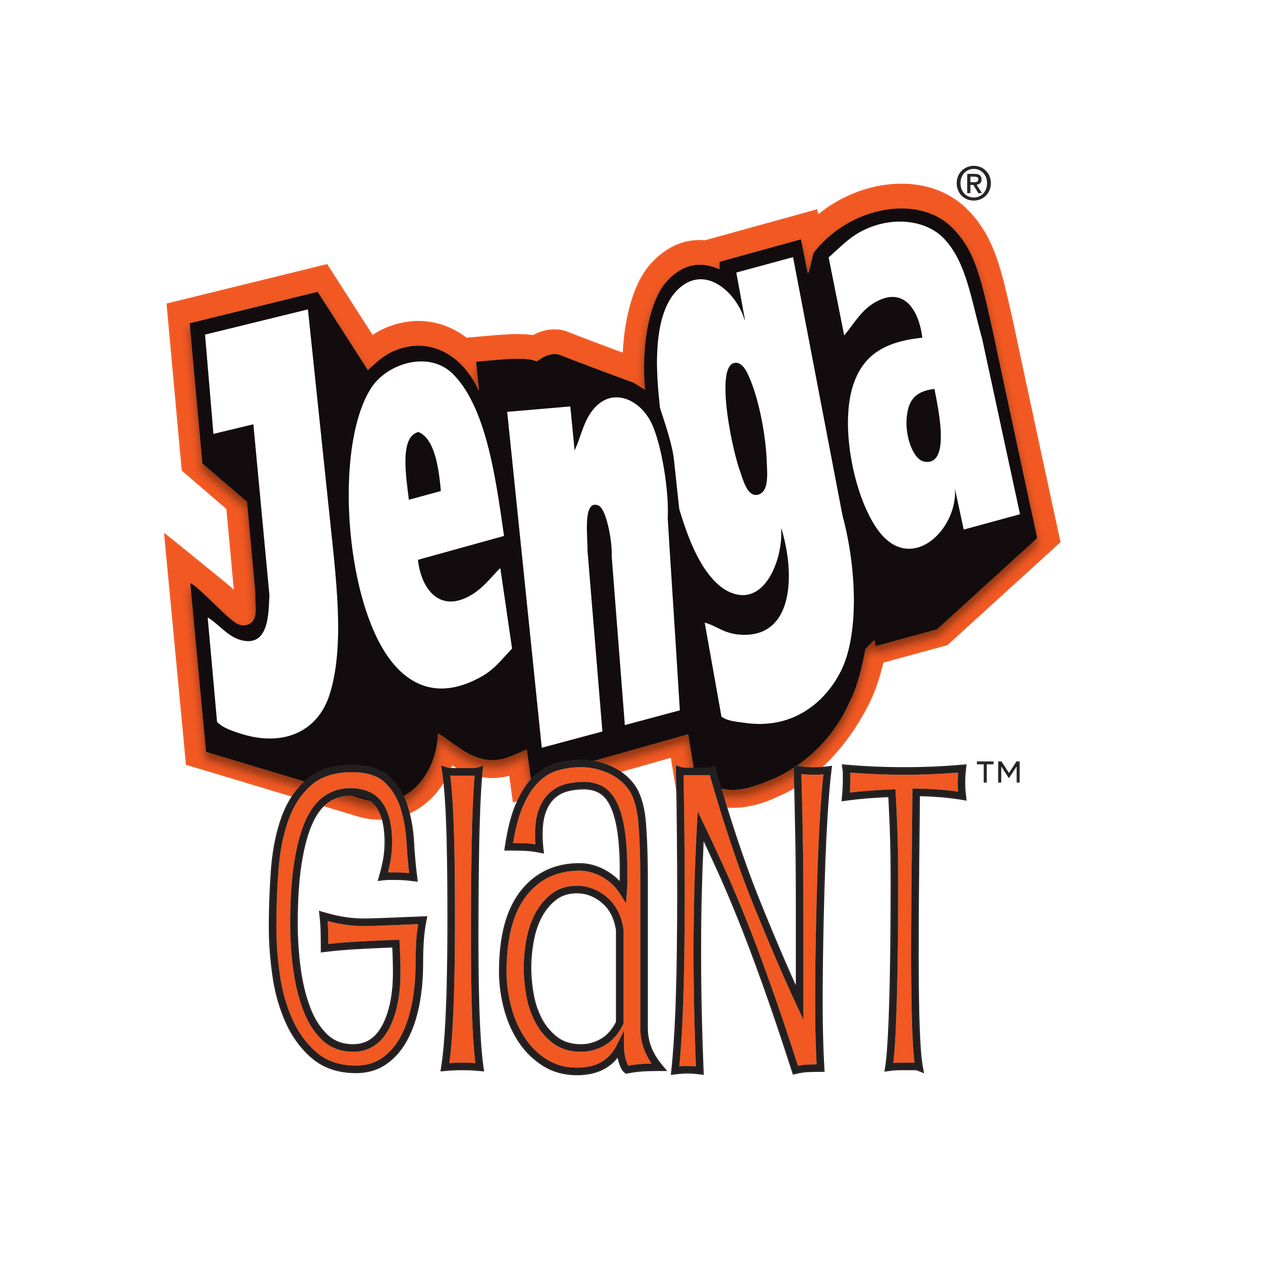 size of giant jenga blocks